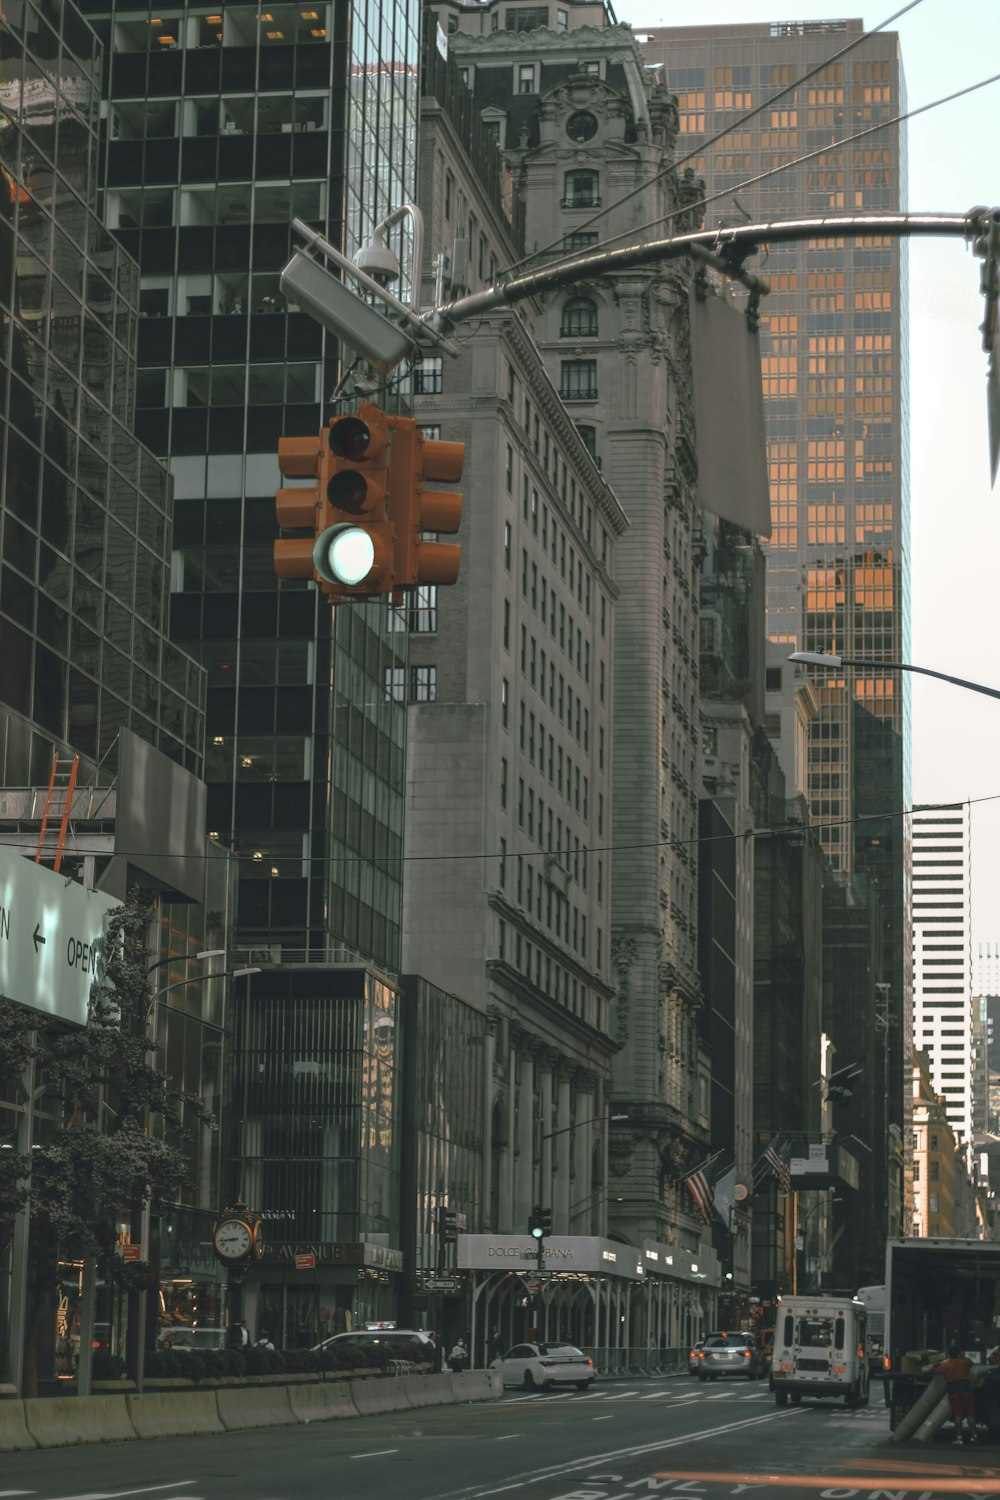 a traffic light hanging over a city street